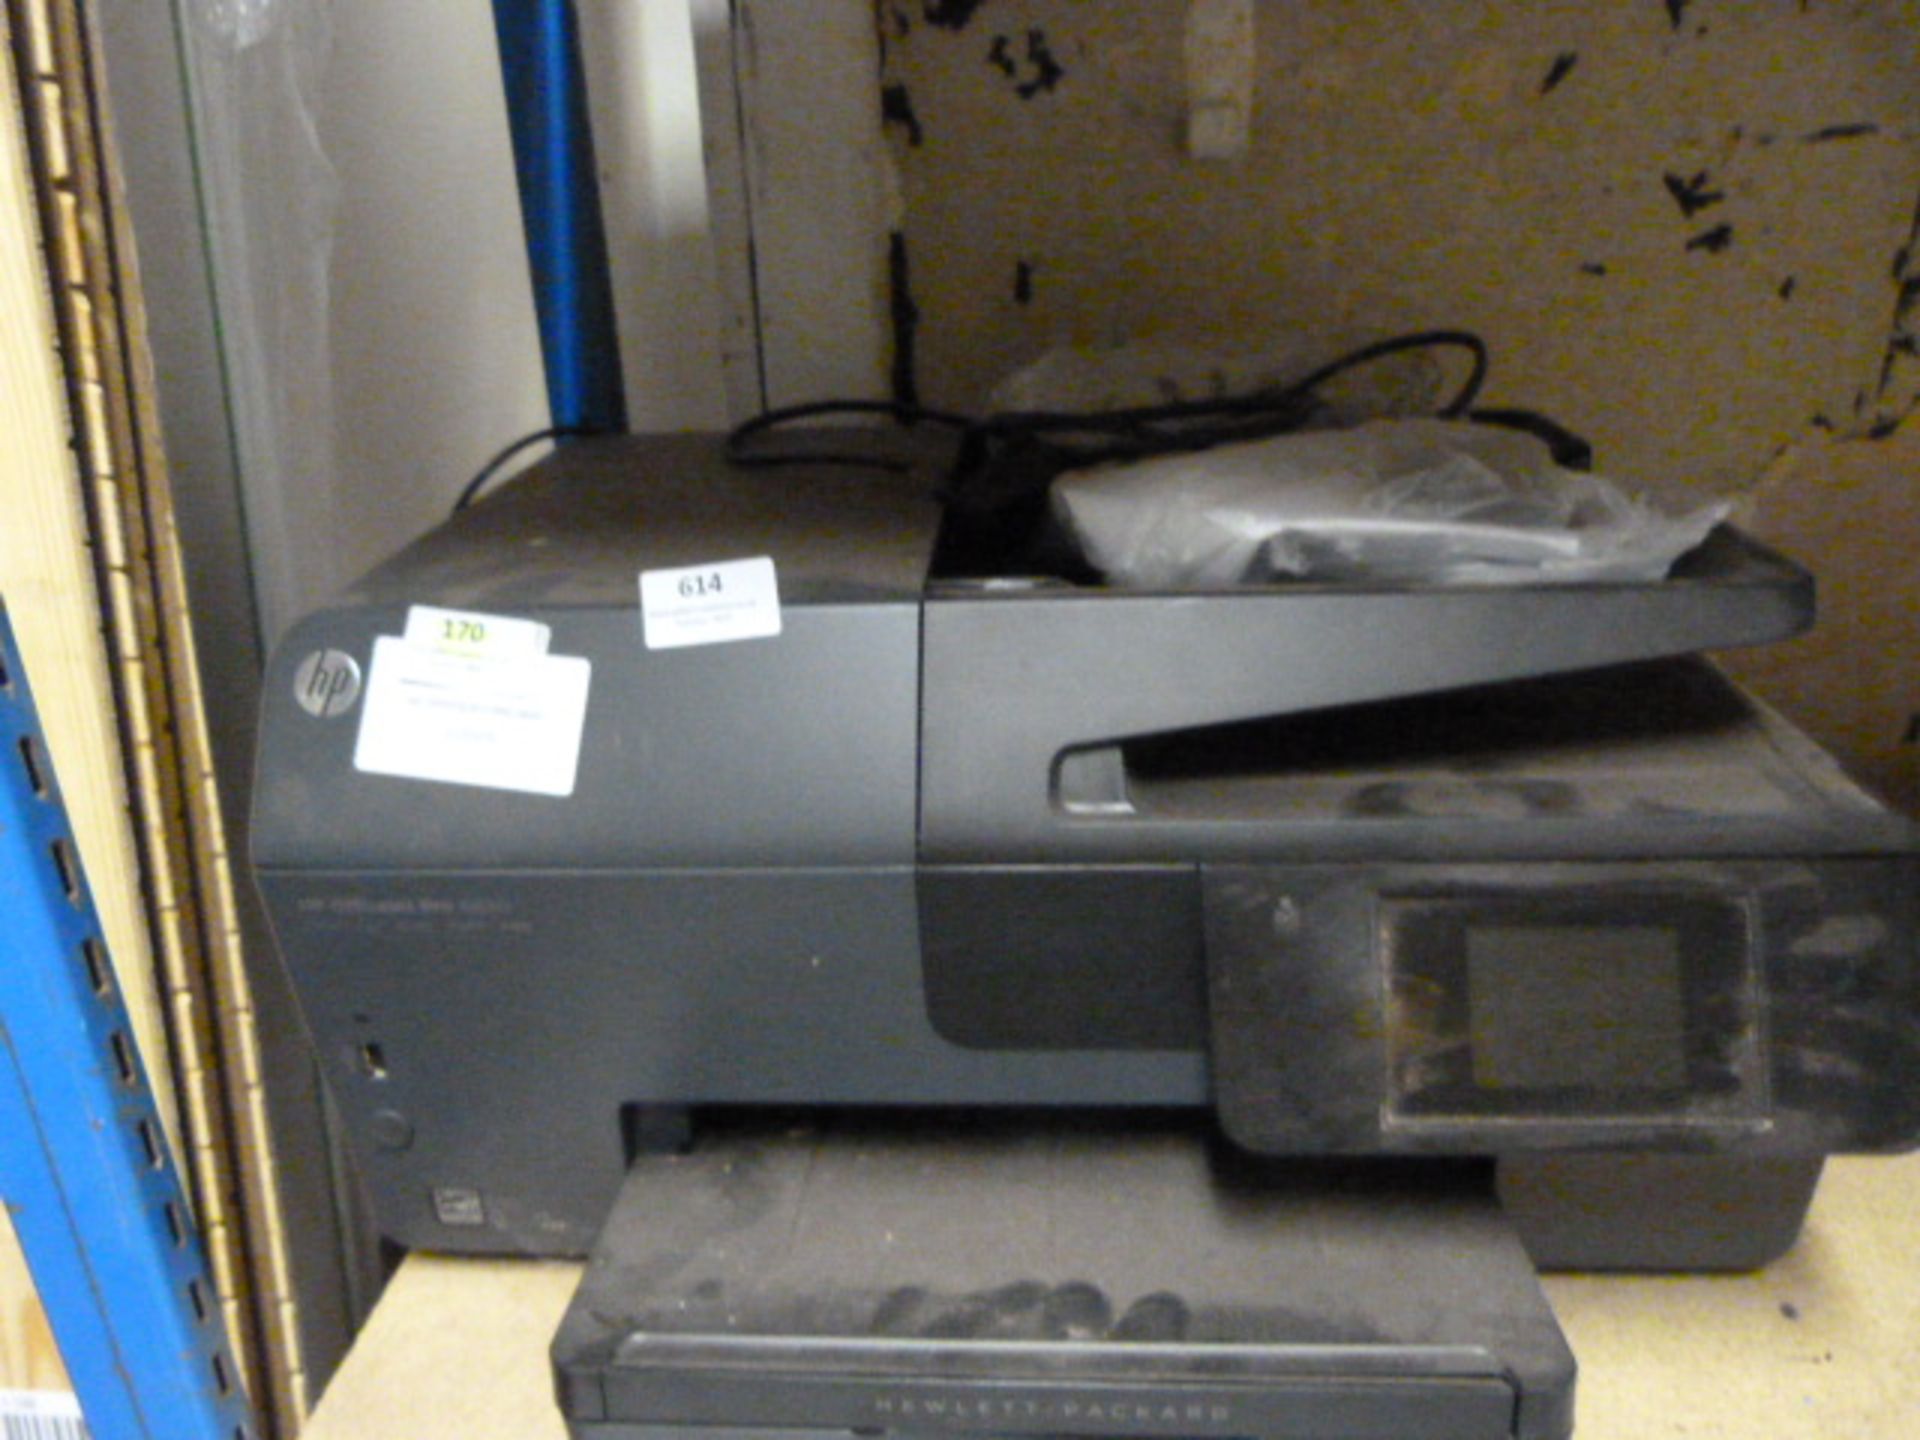 *HP Officejet Pro Printer